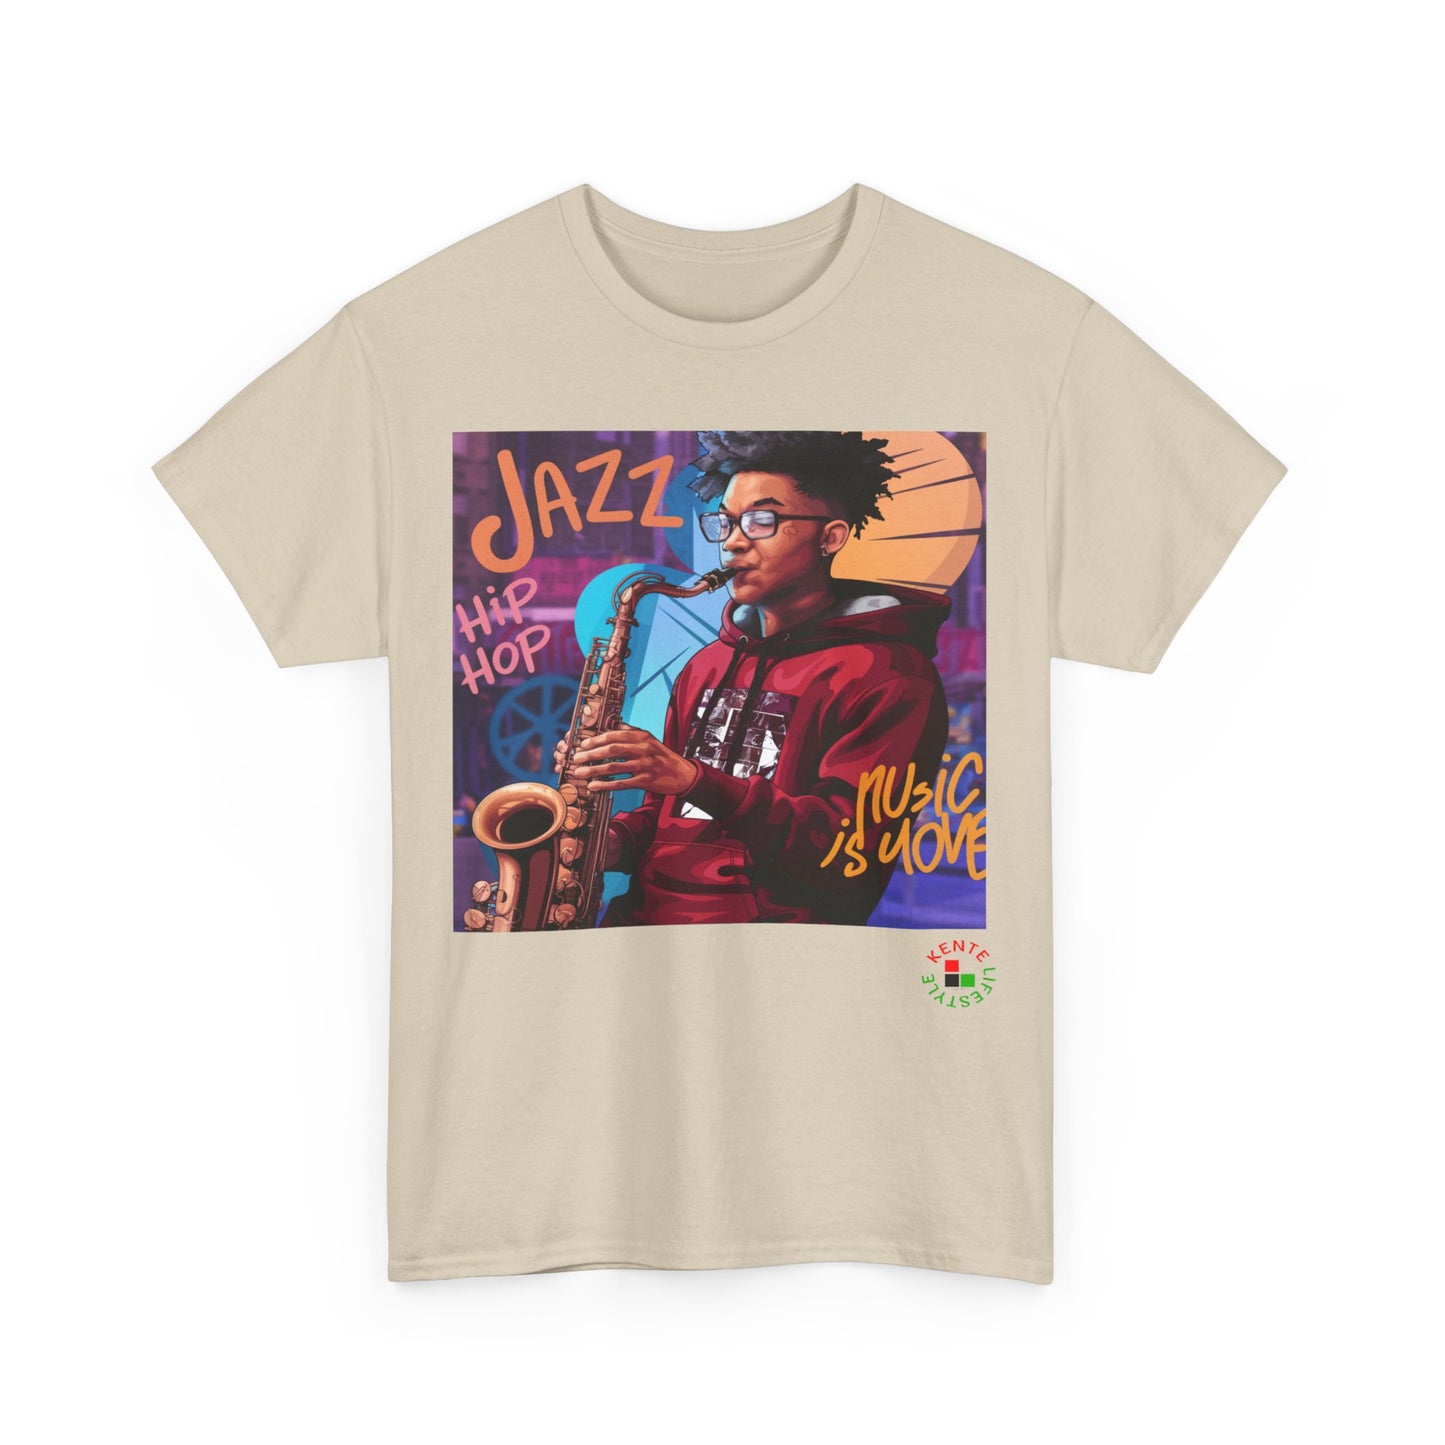 Jazz Music is Love - T-shirt